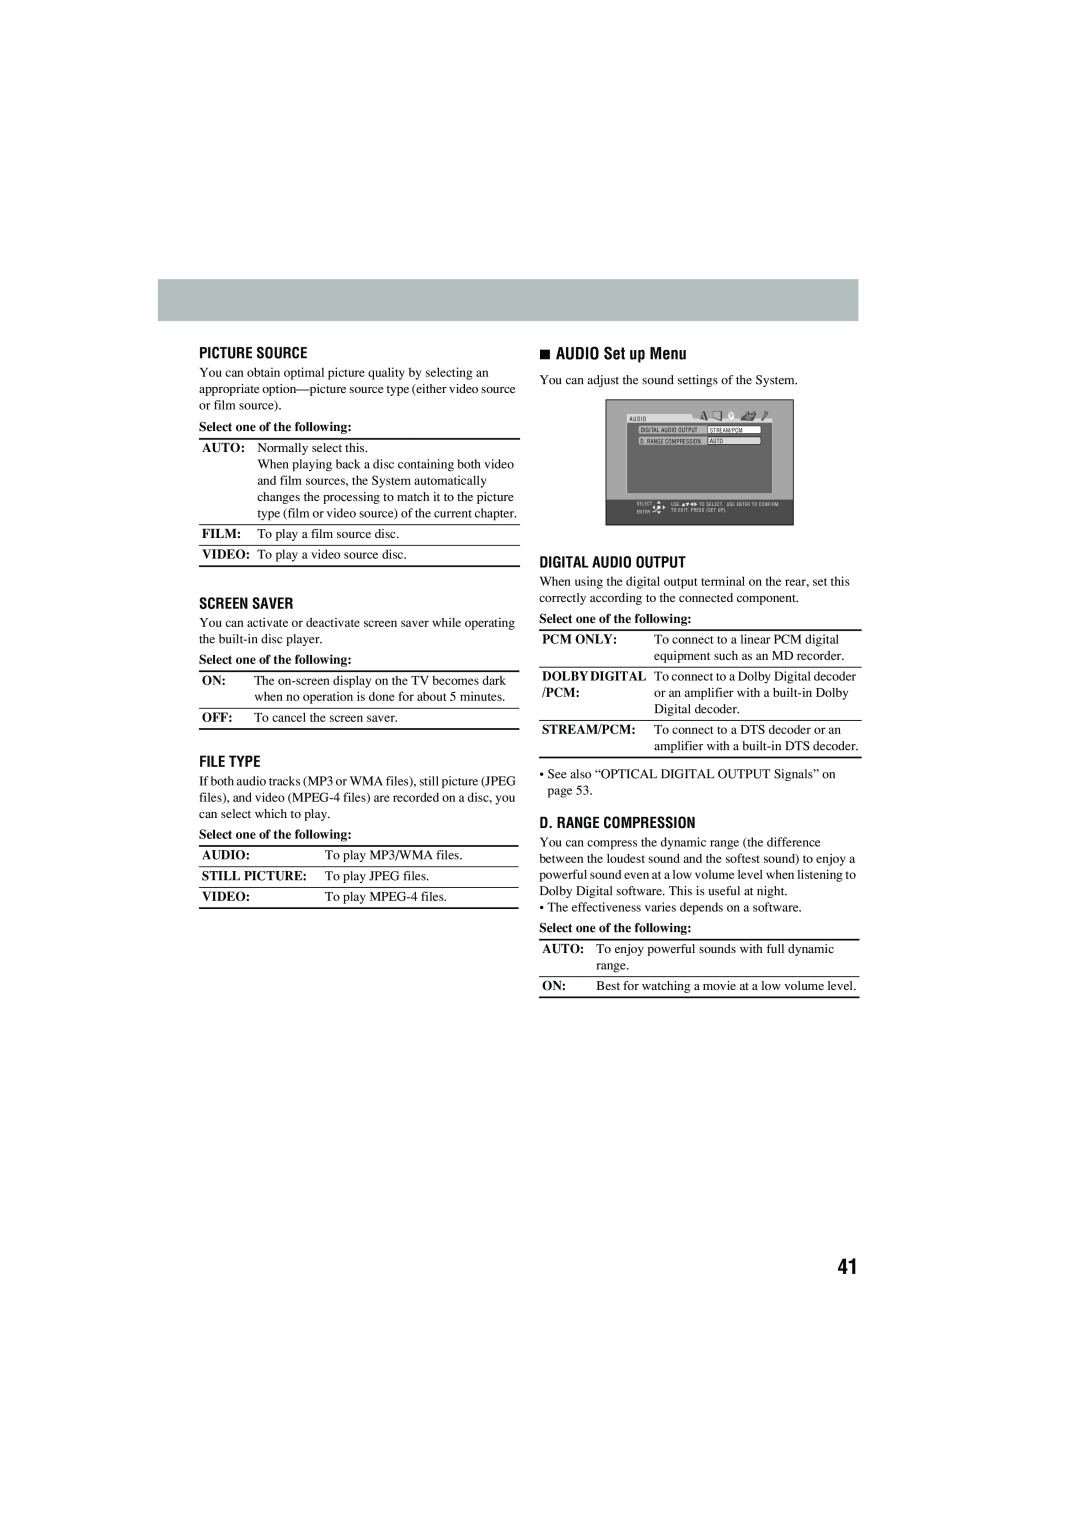 JVC CA-MXJD5 manual 7AUDIO Set up Menu, Picture Source, Screen Saver, File Type, Digital Audio Output, D. Range Compression 